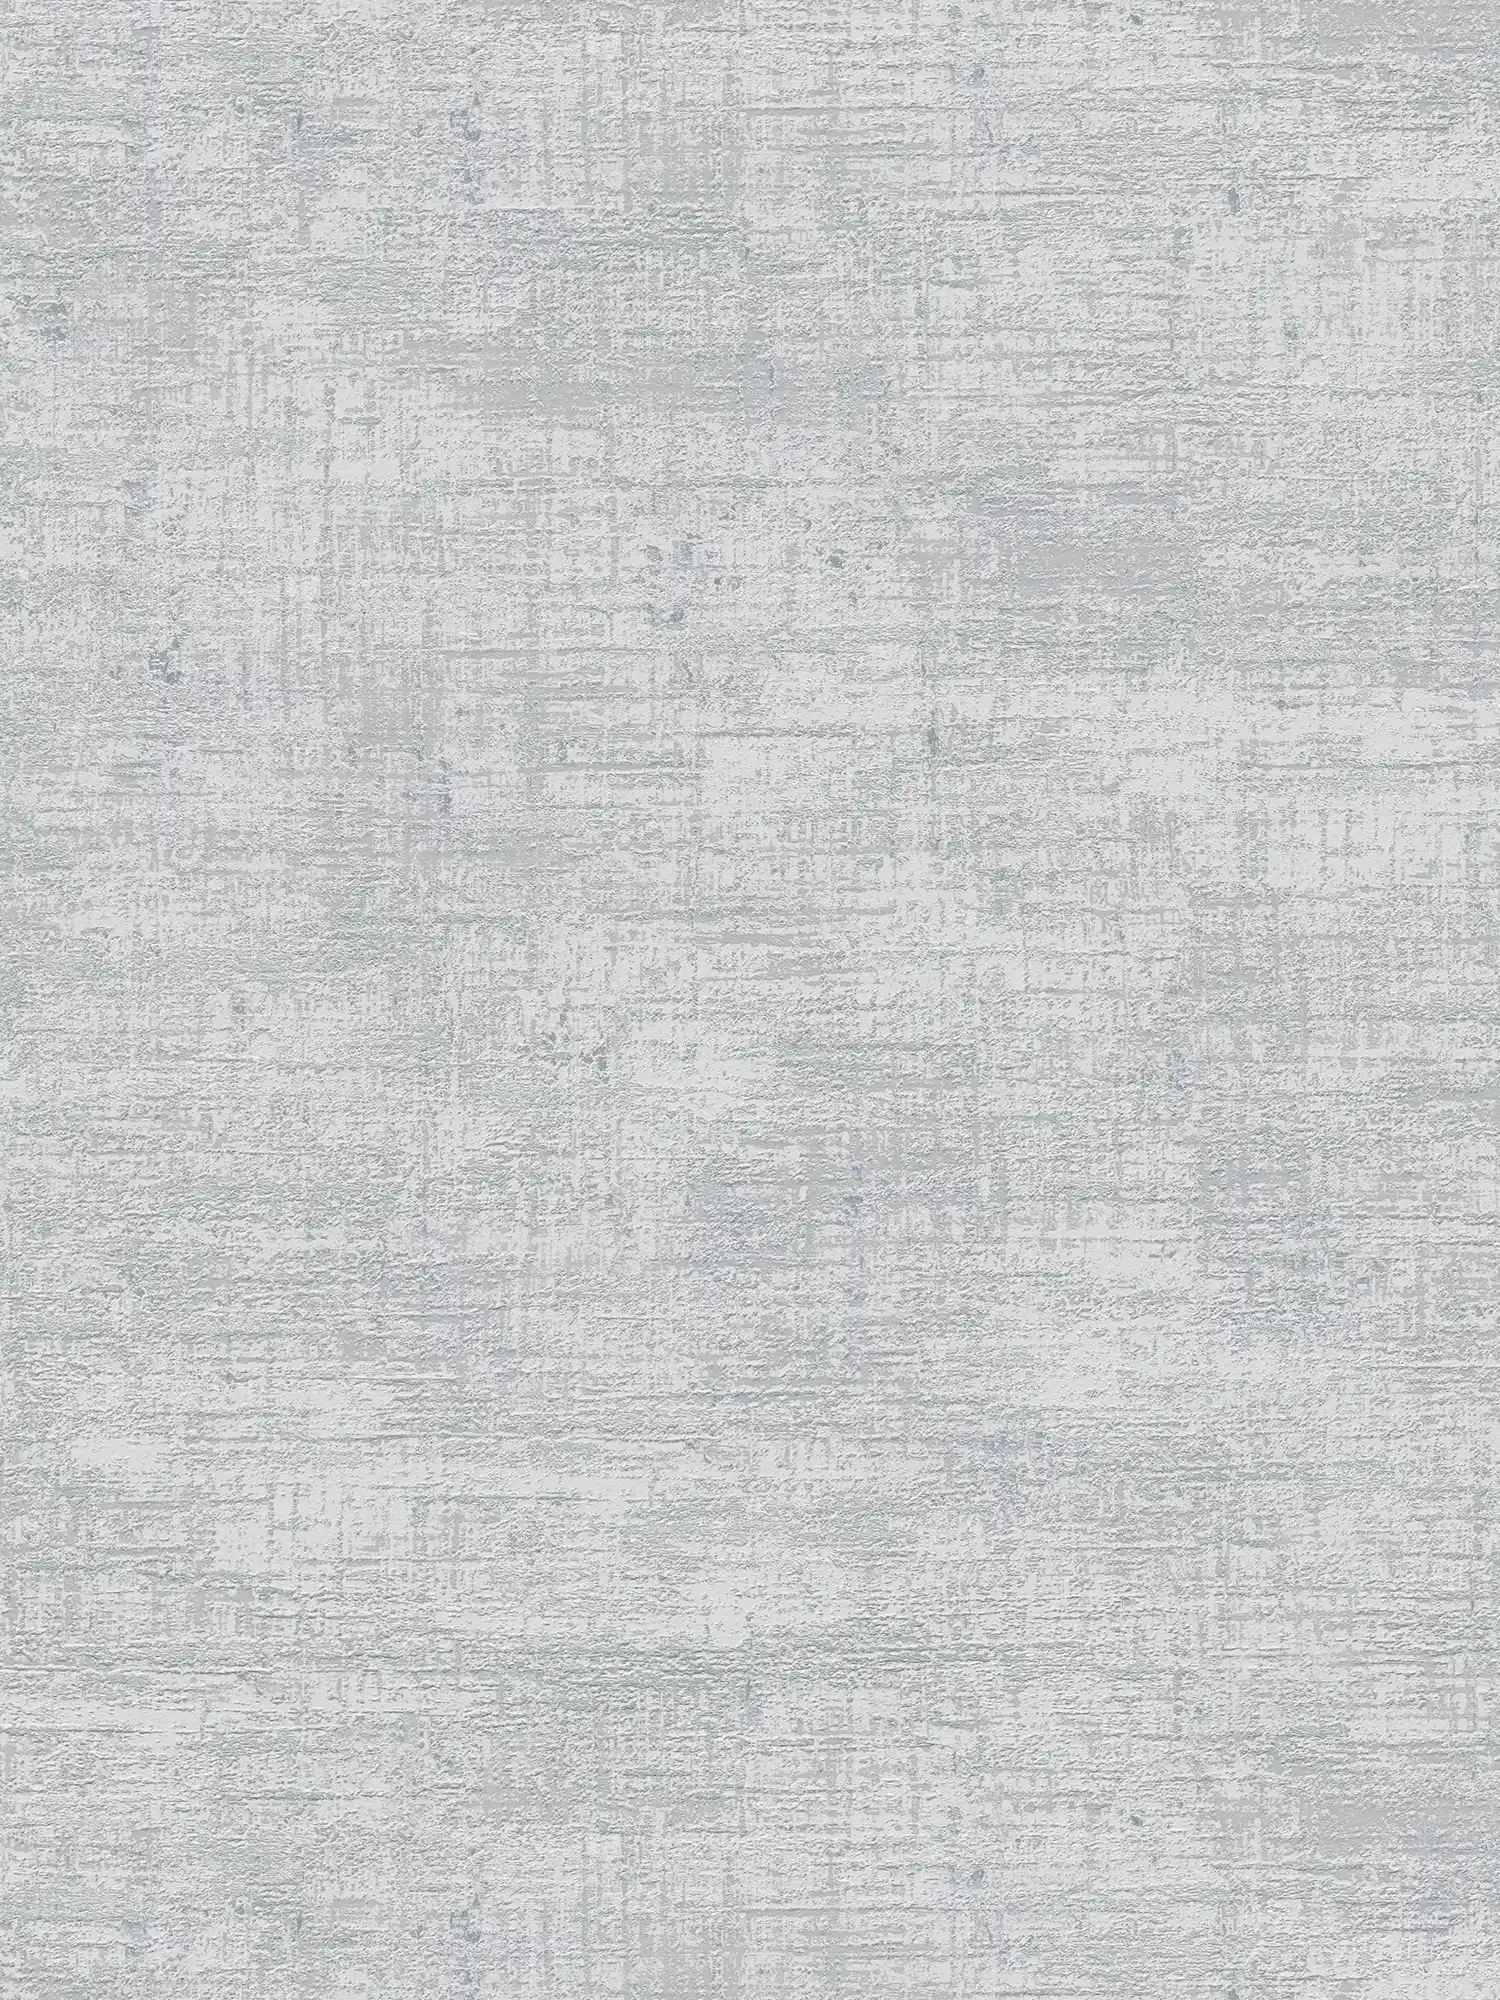 Papel pintado no tejido con detalles metálicos - gris, plata
